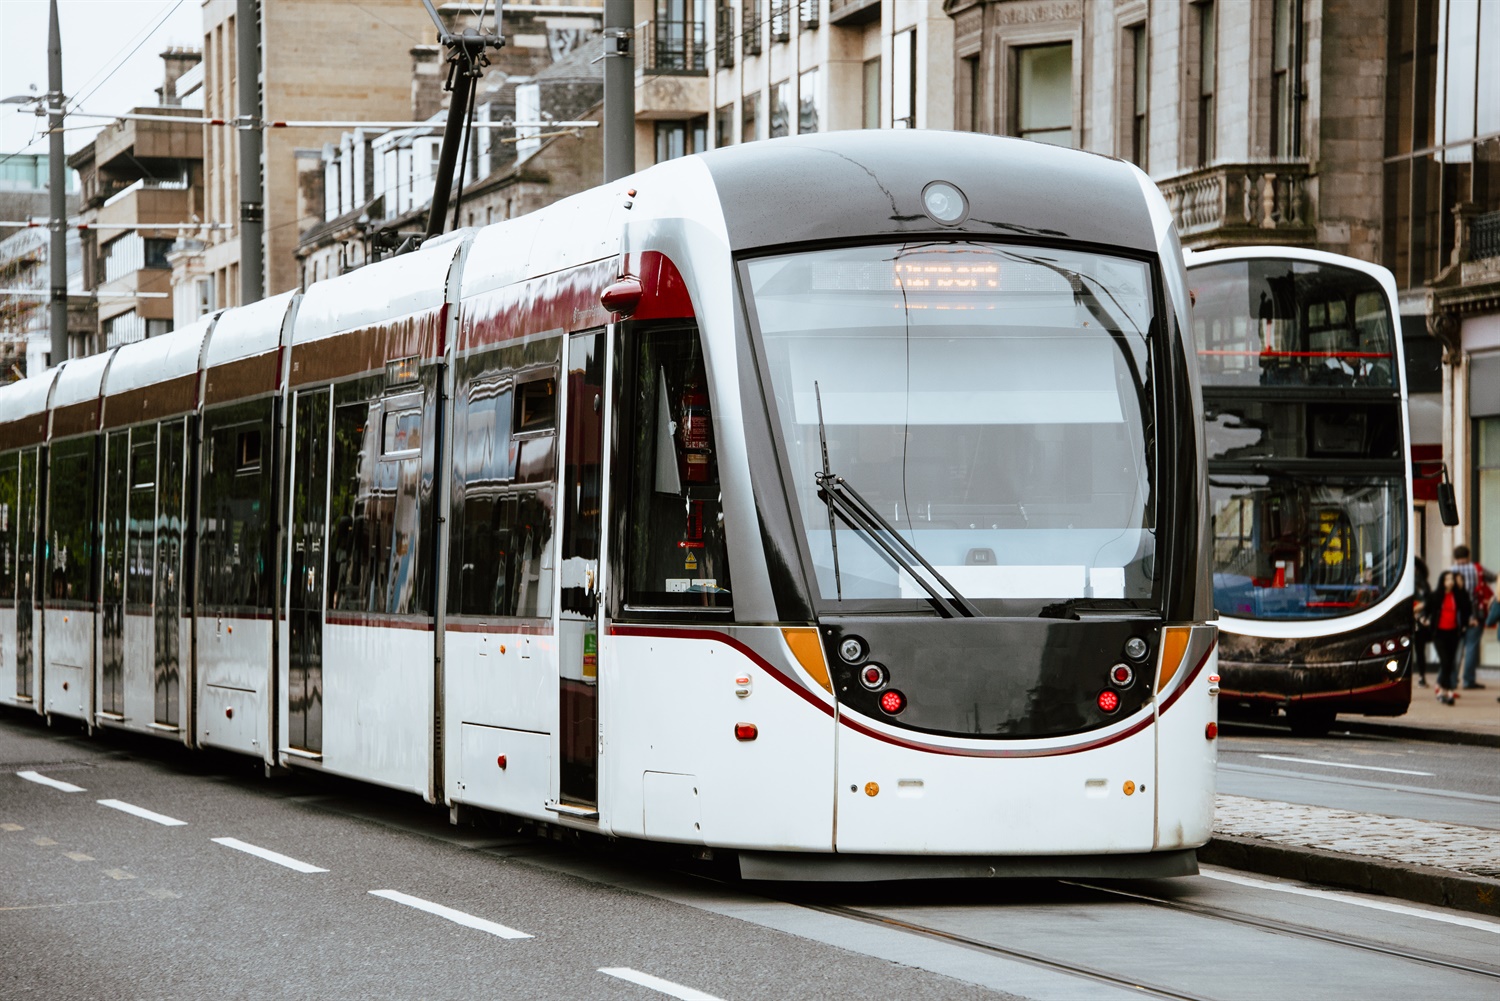 Urgent safety advice calls for louder horns on Edinburgh trams after pedestrian’s death